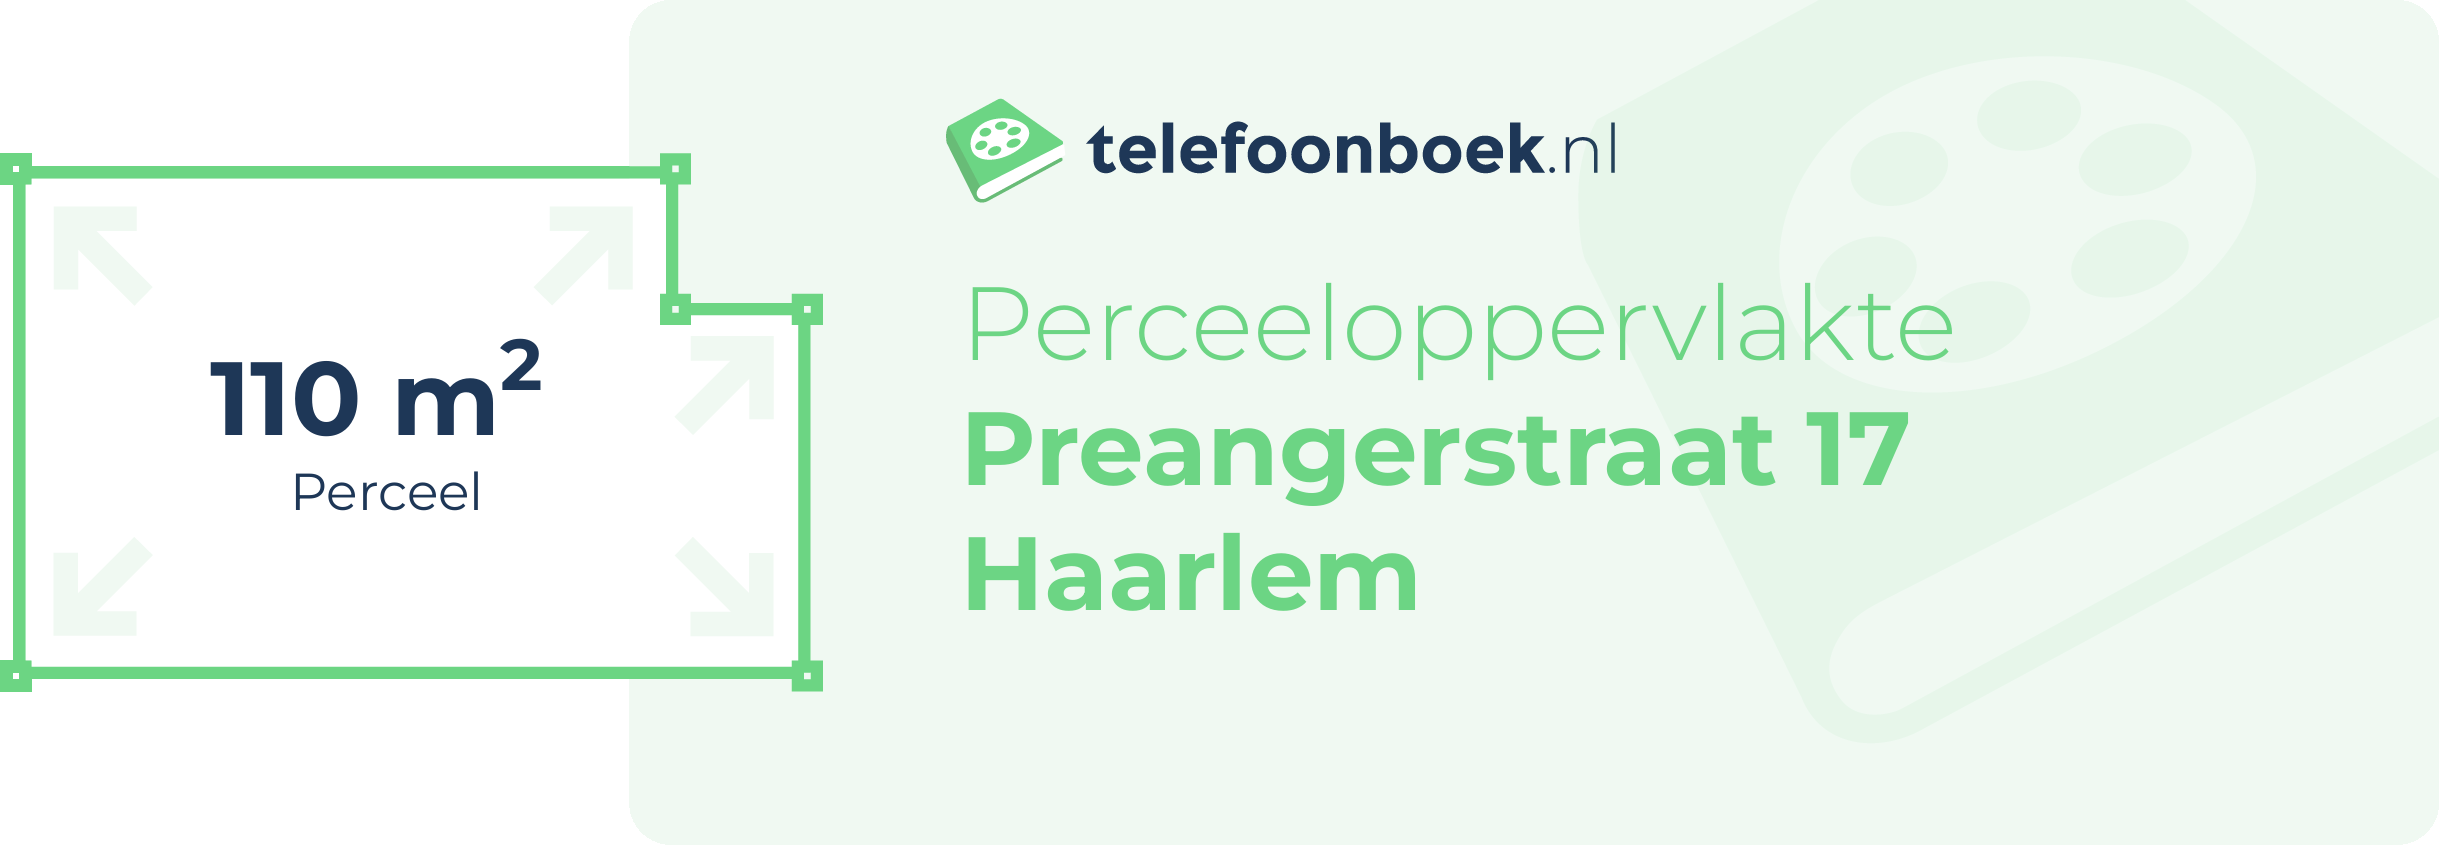 Perceeloppervlakte Preangerstraat 17 Haarlem